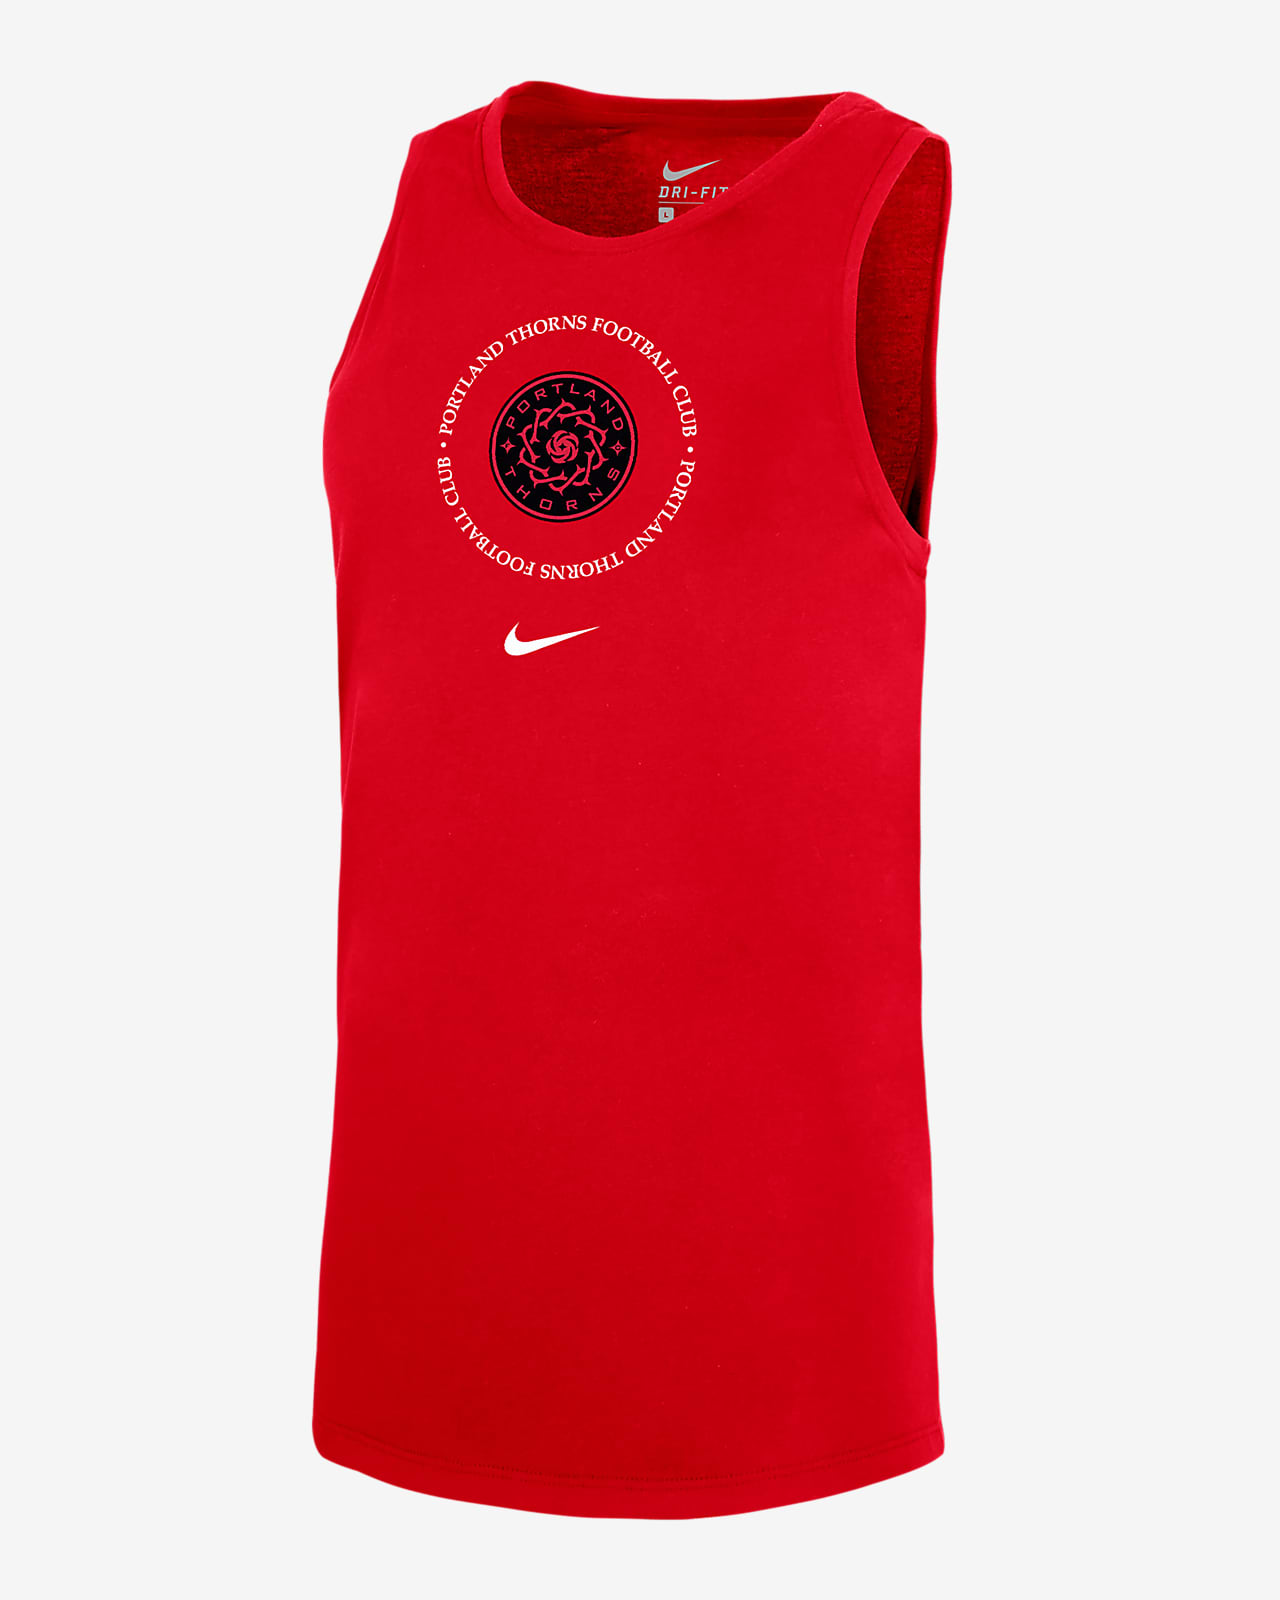 Portland Thorns Women's Nike Dri-FIT Soccer Tank Top